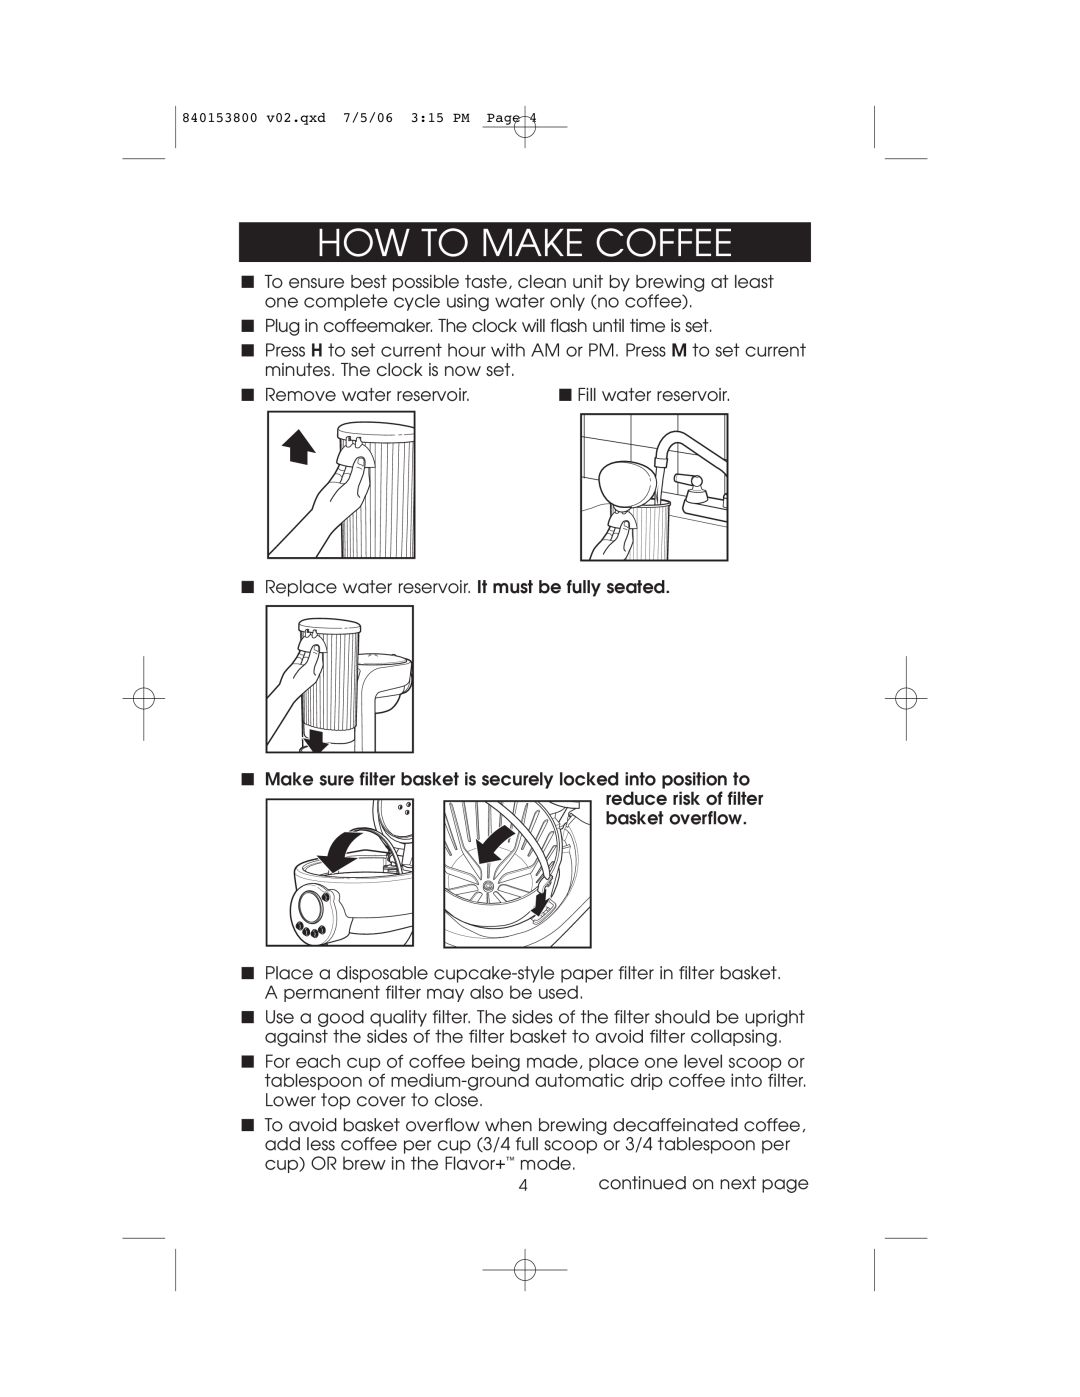 Hamilton Beach 840153800 owner manual How To Make Coffee 